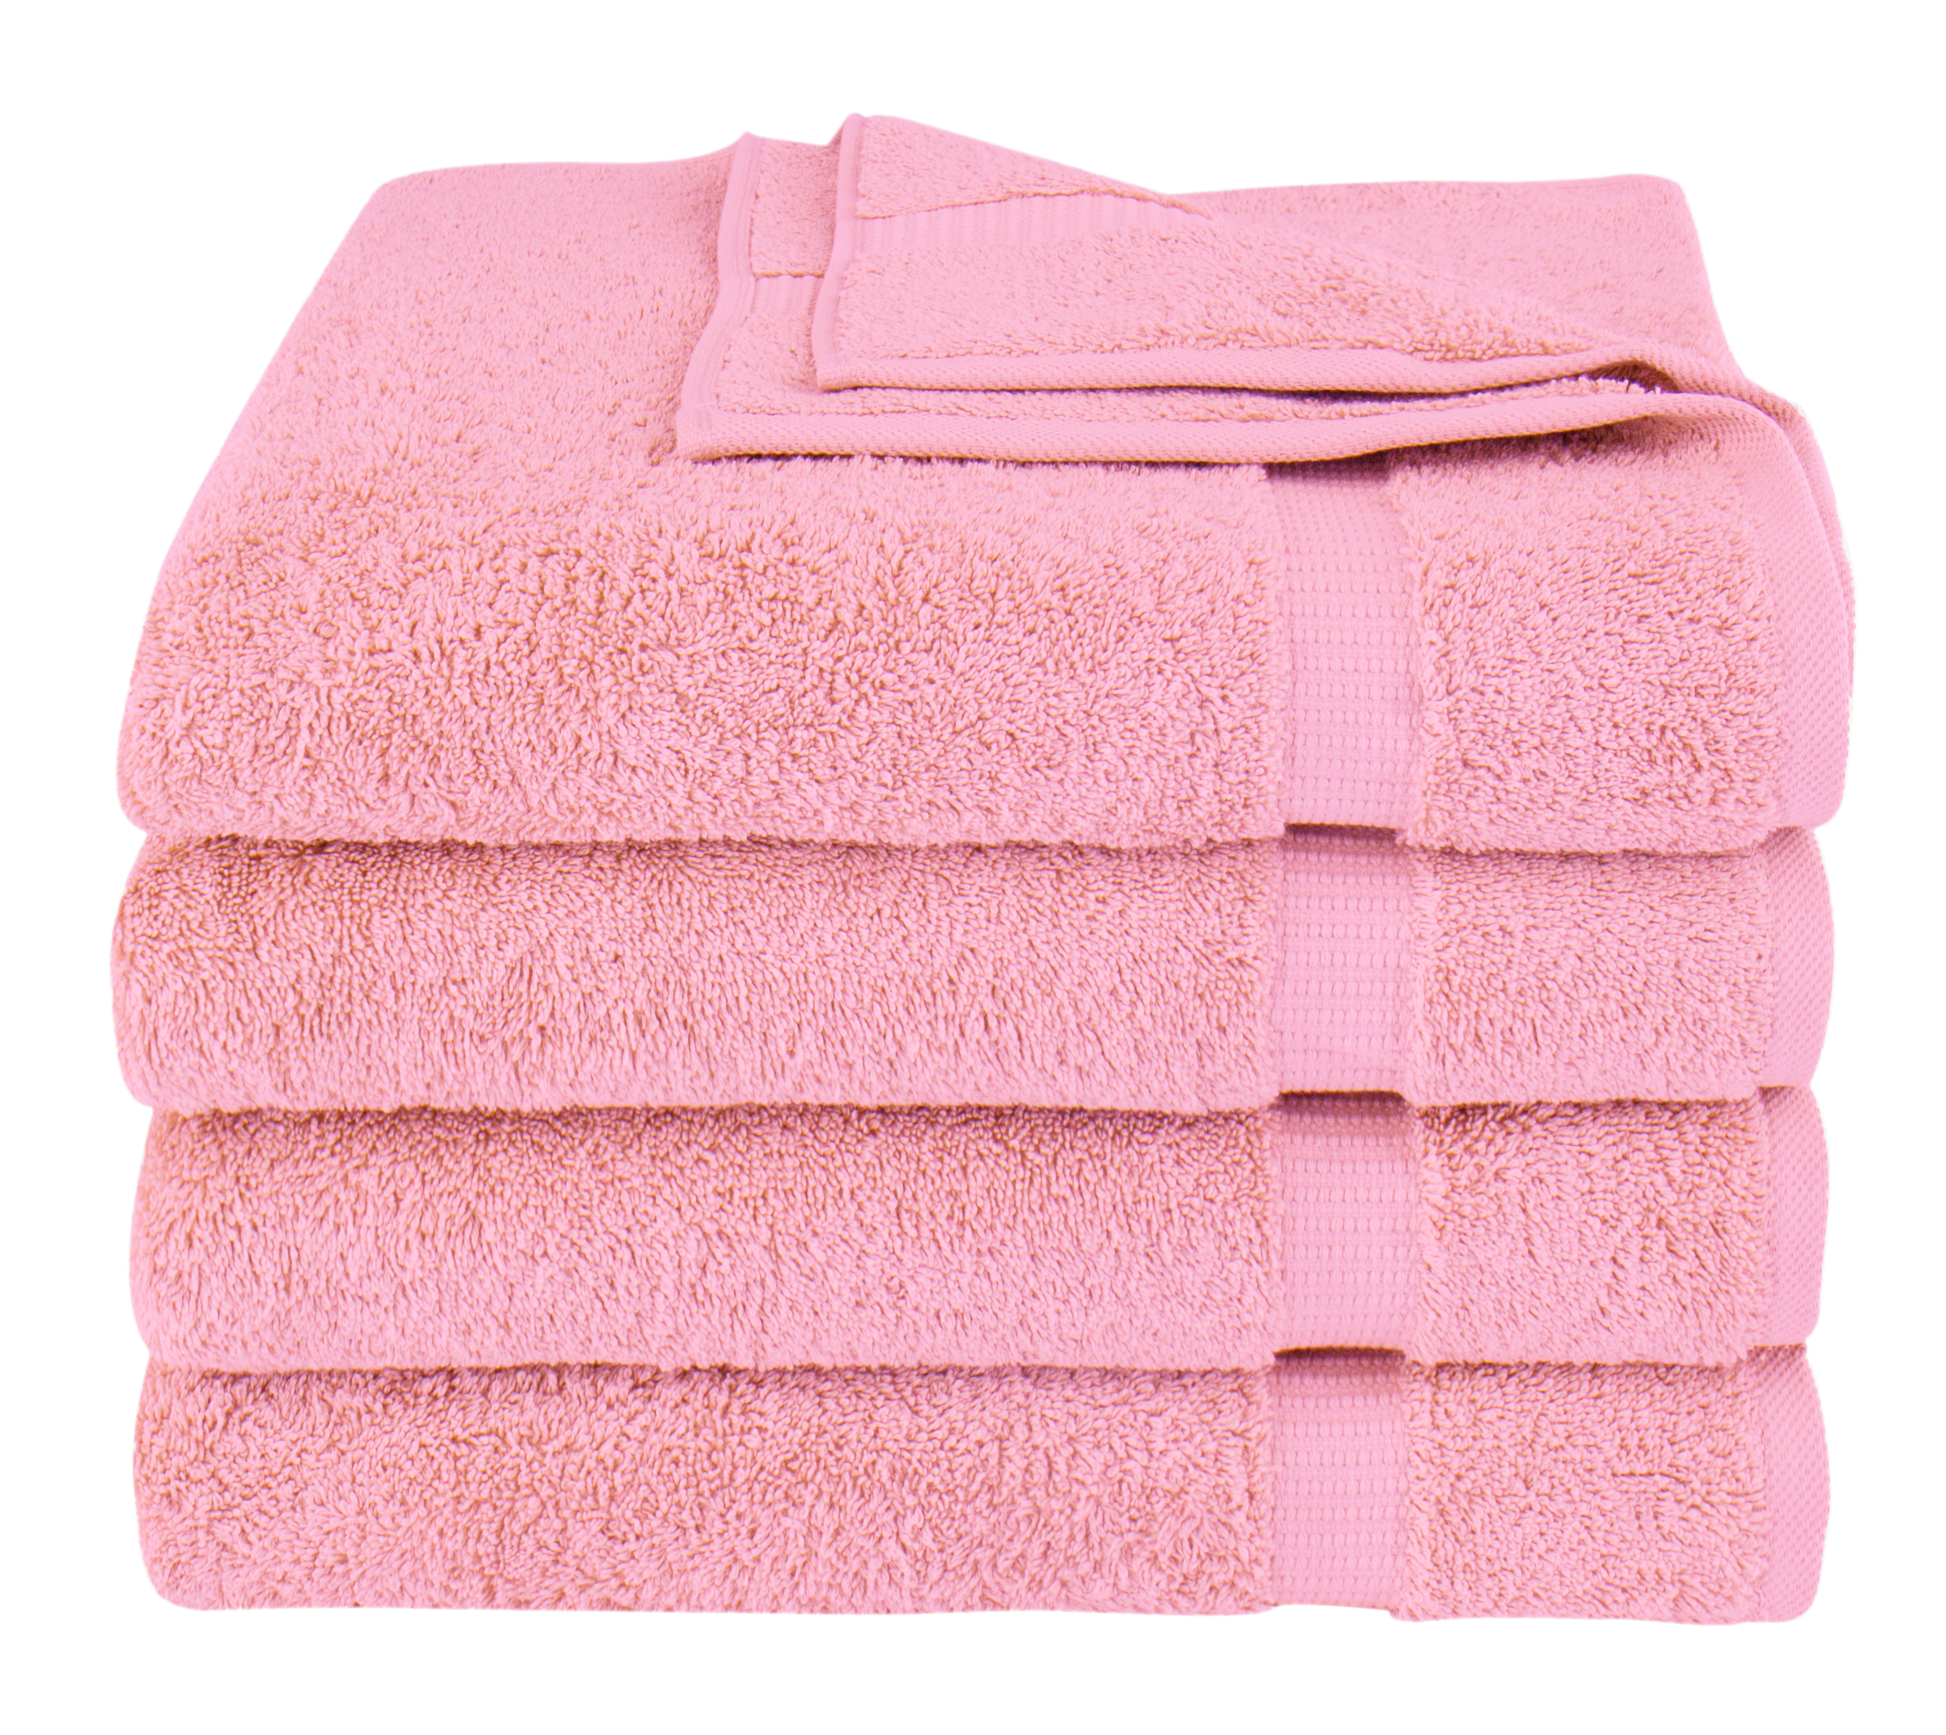 Villa Turkish Cotton Bath Towels - 4 Pieces - Classic Turkish Towels